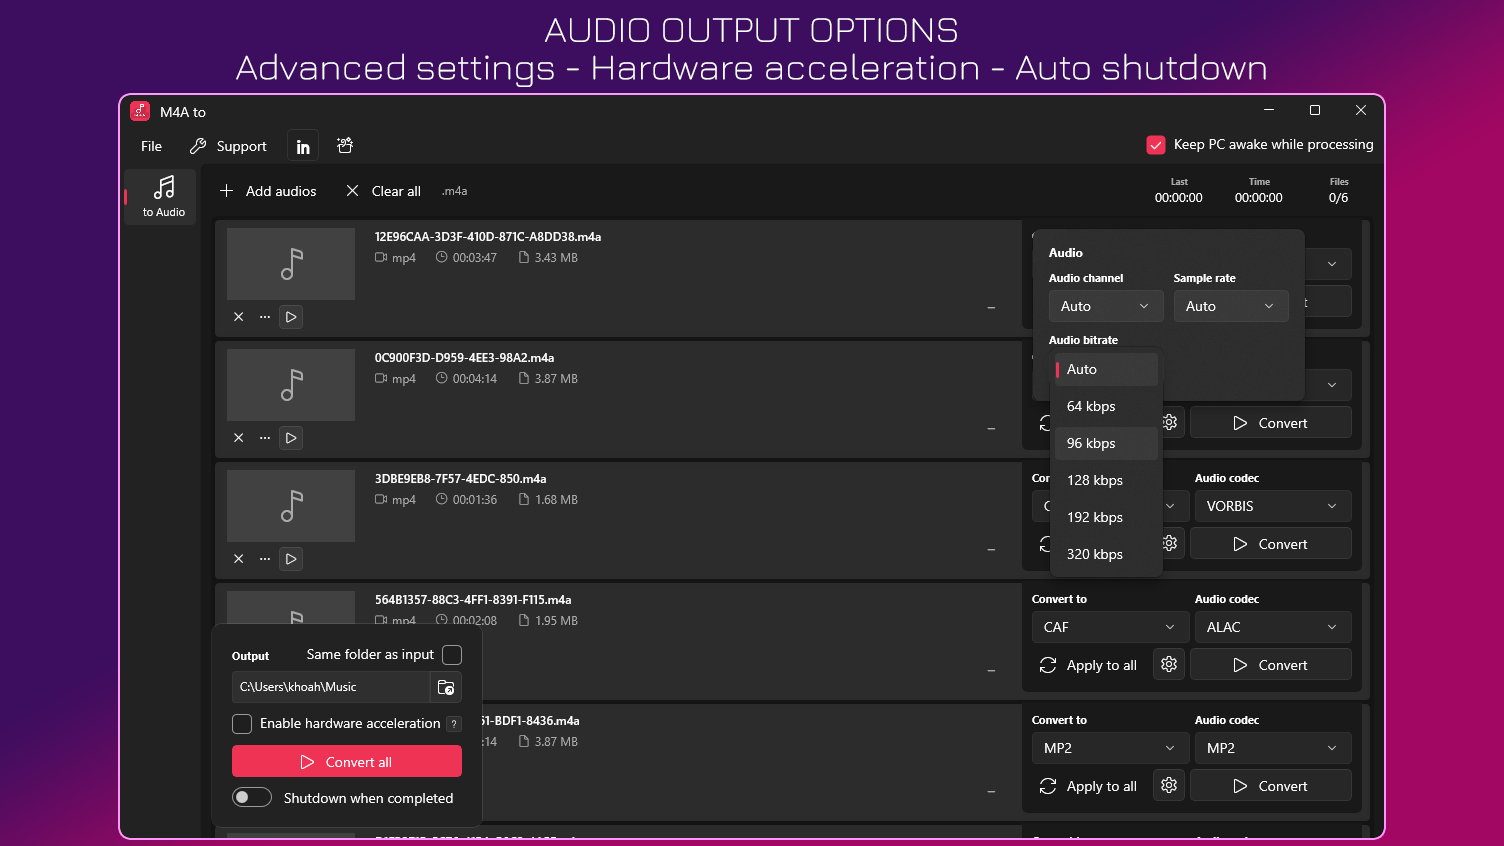 Audio Output Options - Advanced settings - Hardware accelerator - Auto shutdown